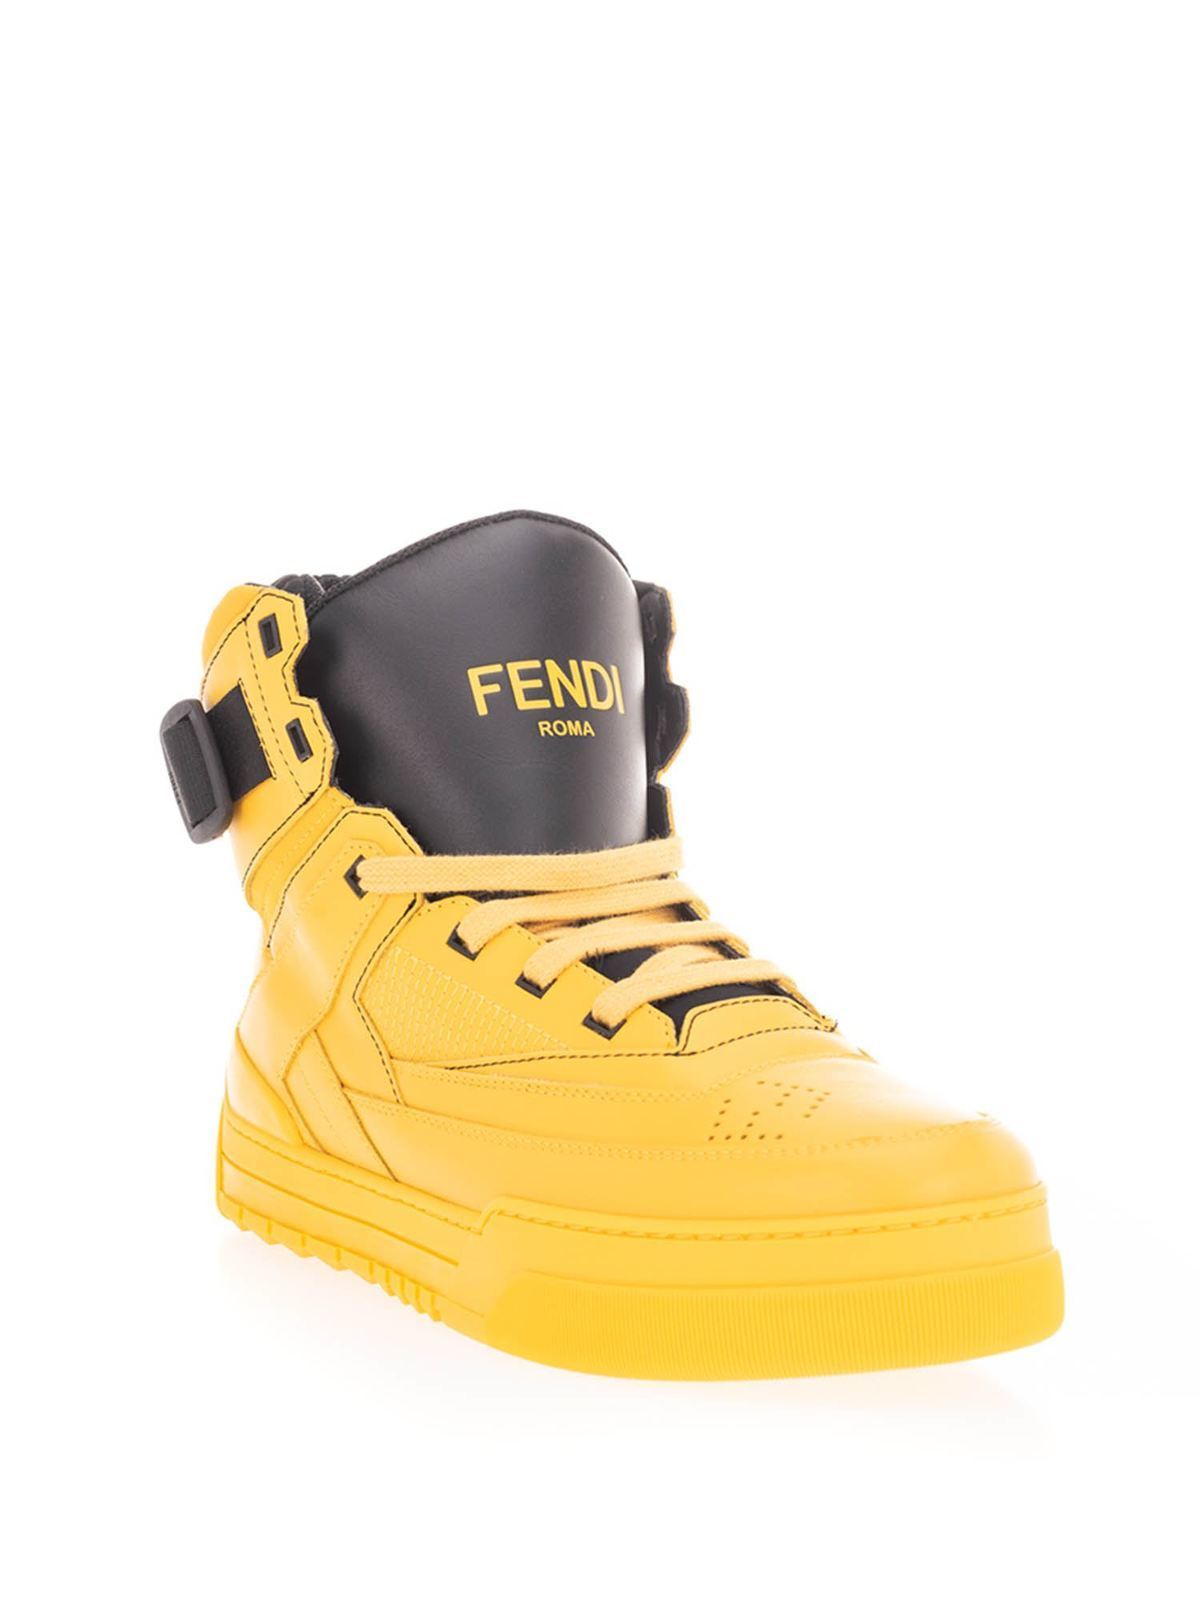 fendi shoes yellow